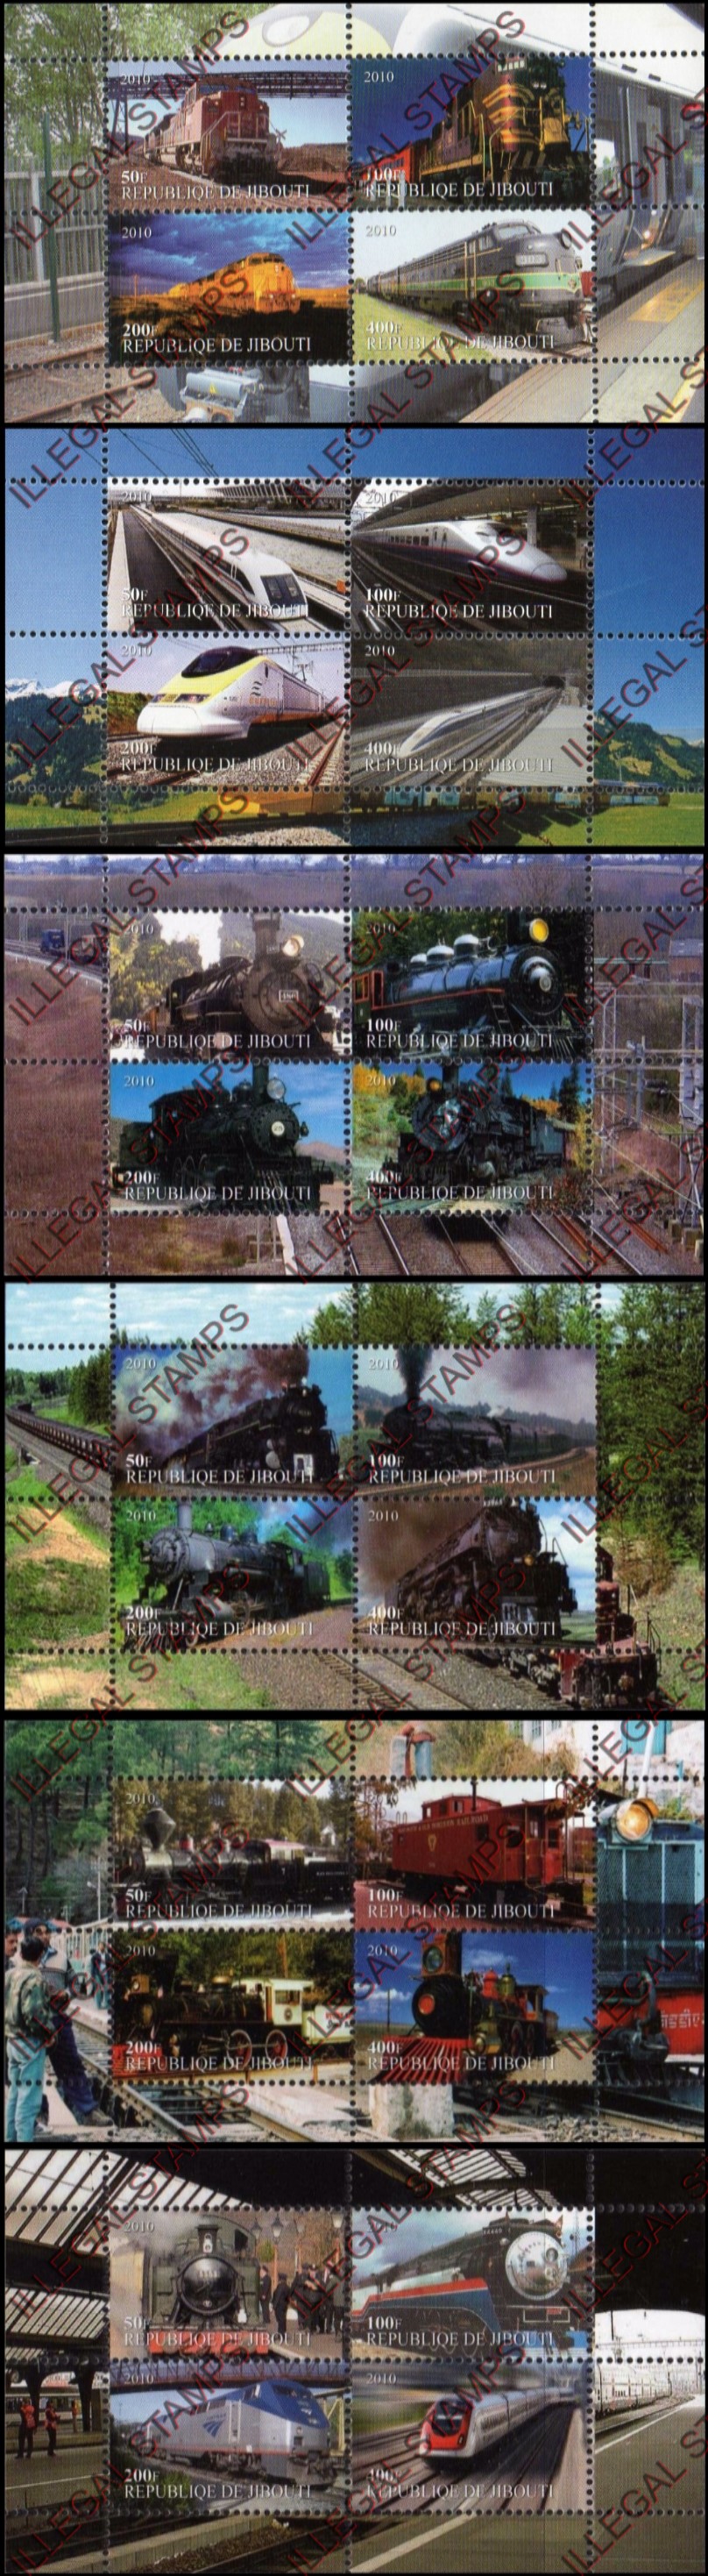 Djibouti 2010 Trains Illegal Stamp Souvenir Sheets of 4